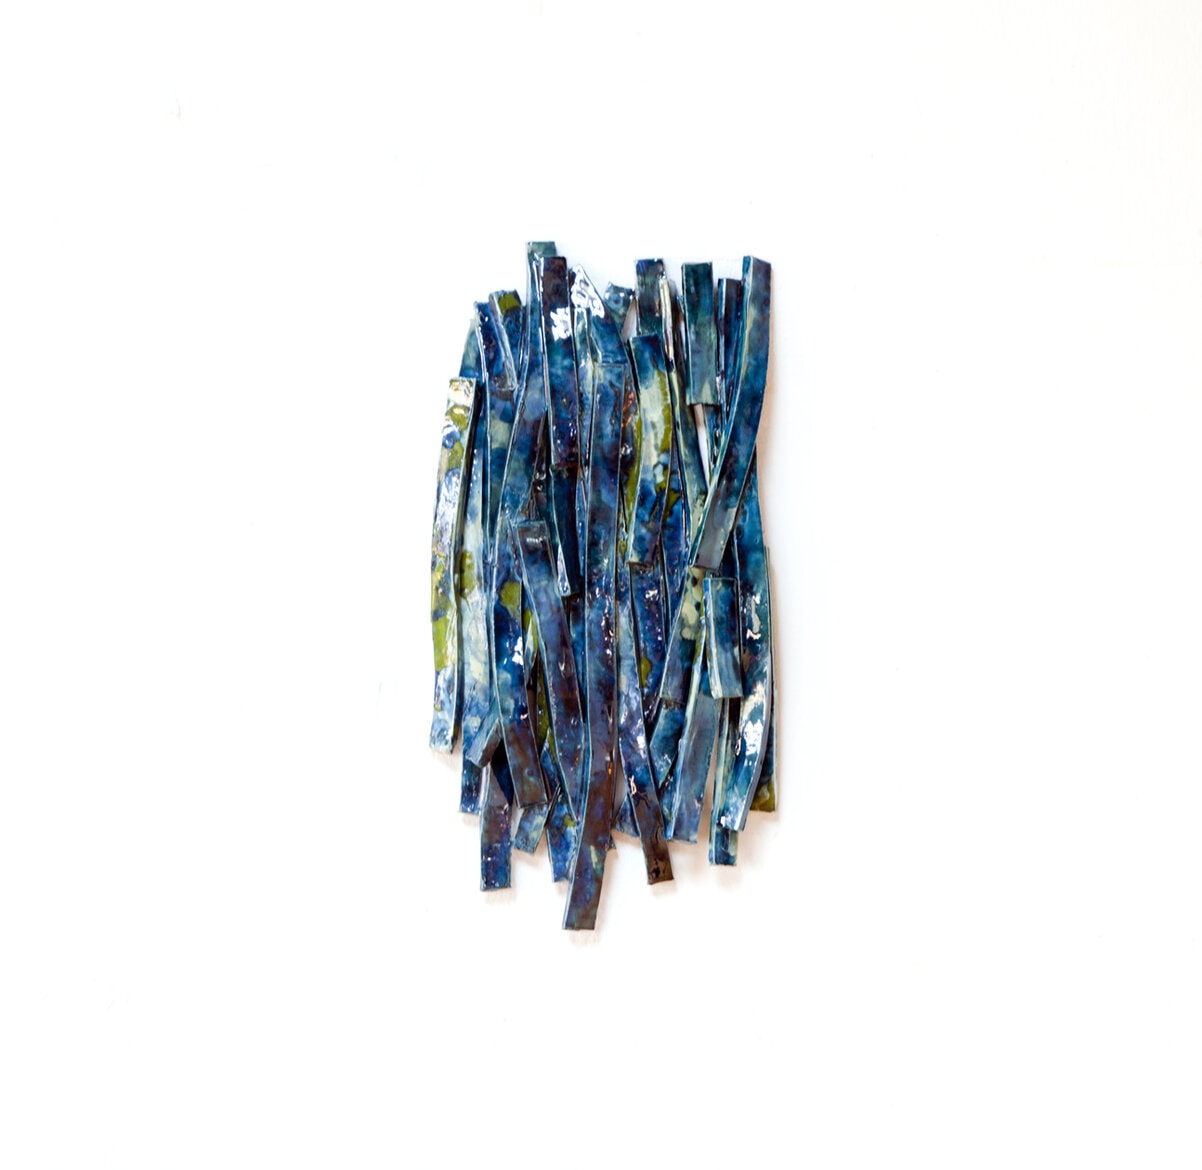 ‘Blaue Bänder’ (blue ribbons)’, 2020, glazed ceramic, ca. 45 x 24 x 4 cm